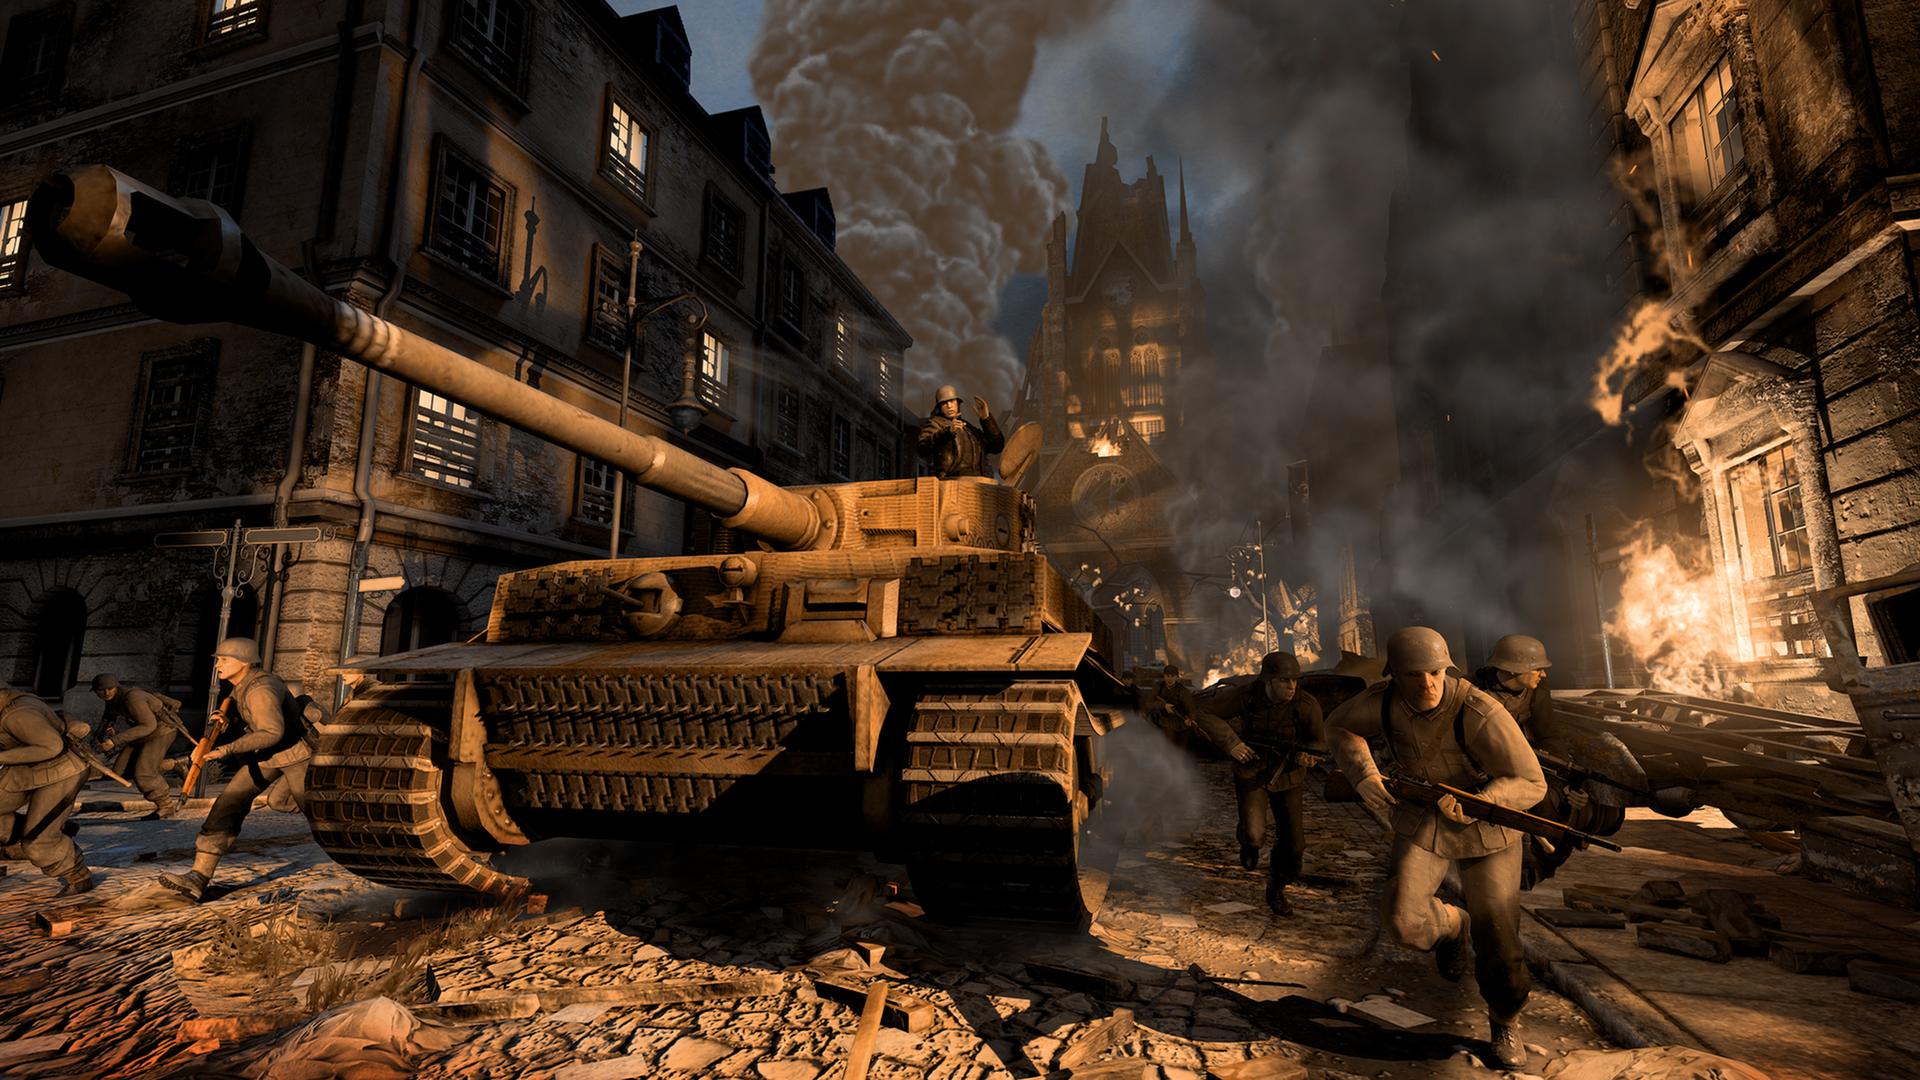 Screenshot №7 from game Sniper Elite V2